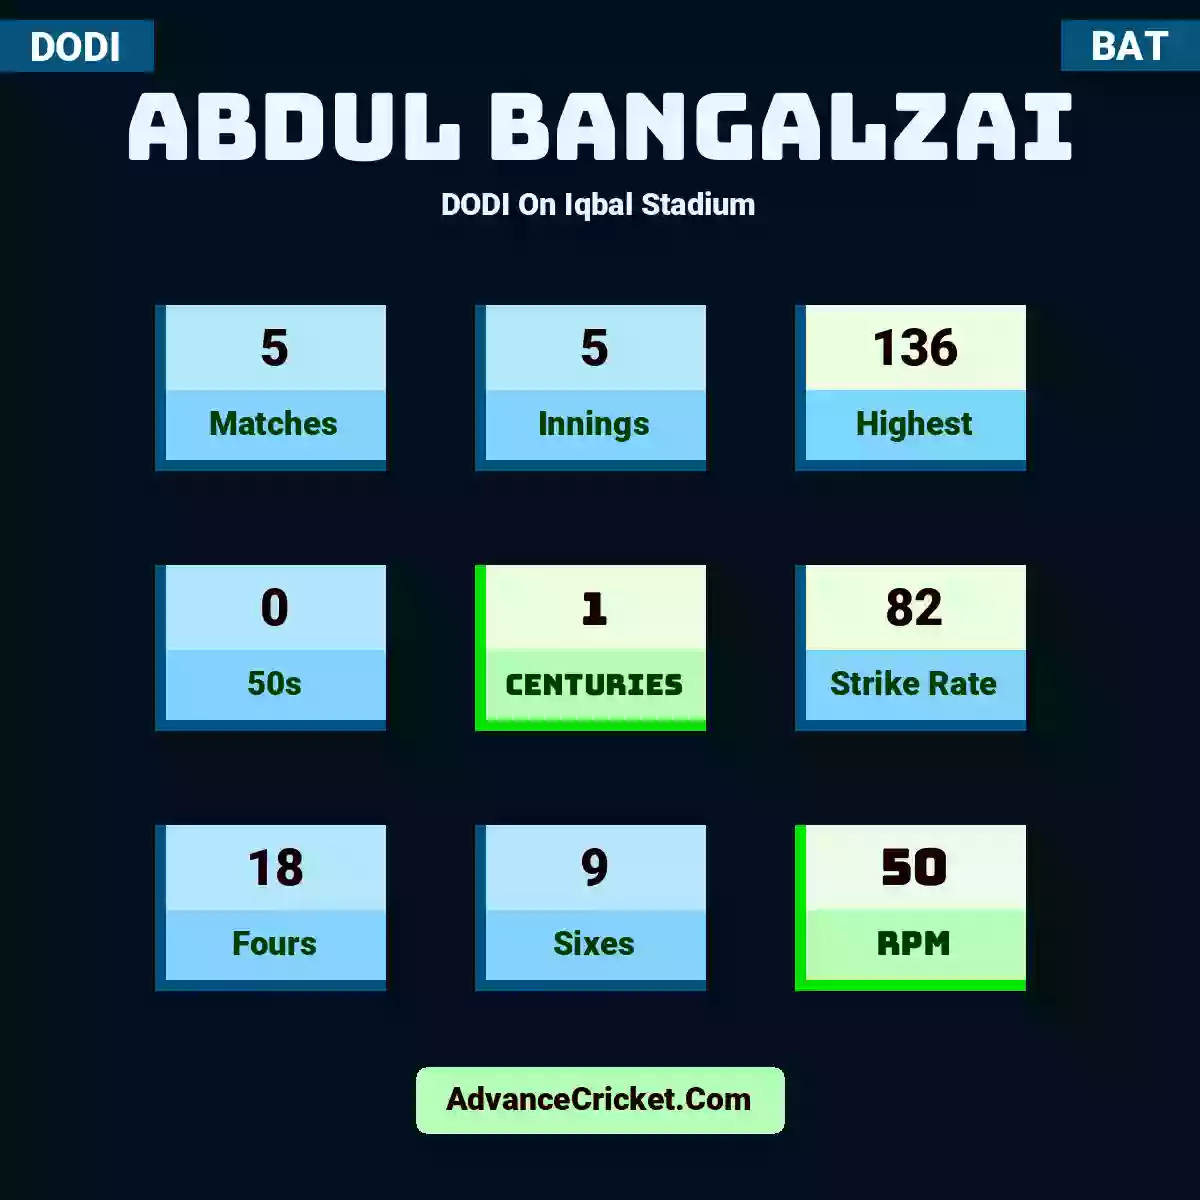 Abdul Bangalzai DODI  On Iqbal Stadium, Abdul Bangalzai played 5 matches, scored 136 runs as highest, 0 half-centuries, and 1 centuries, with a strike rate of 82. A.Bangalzai hit 18 fours and 9 sixes, with an RPM of 50.